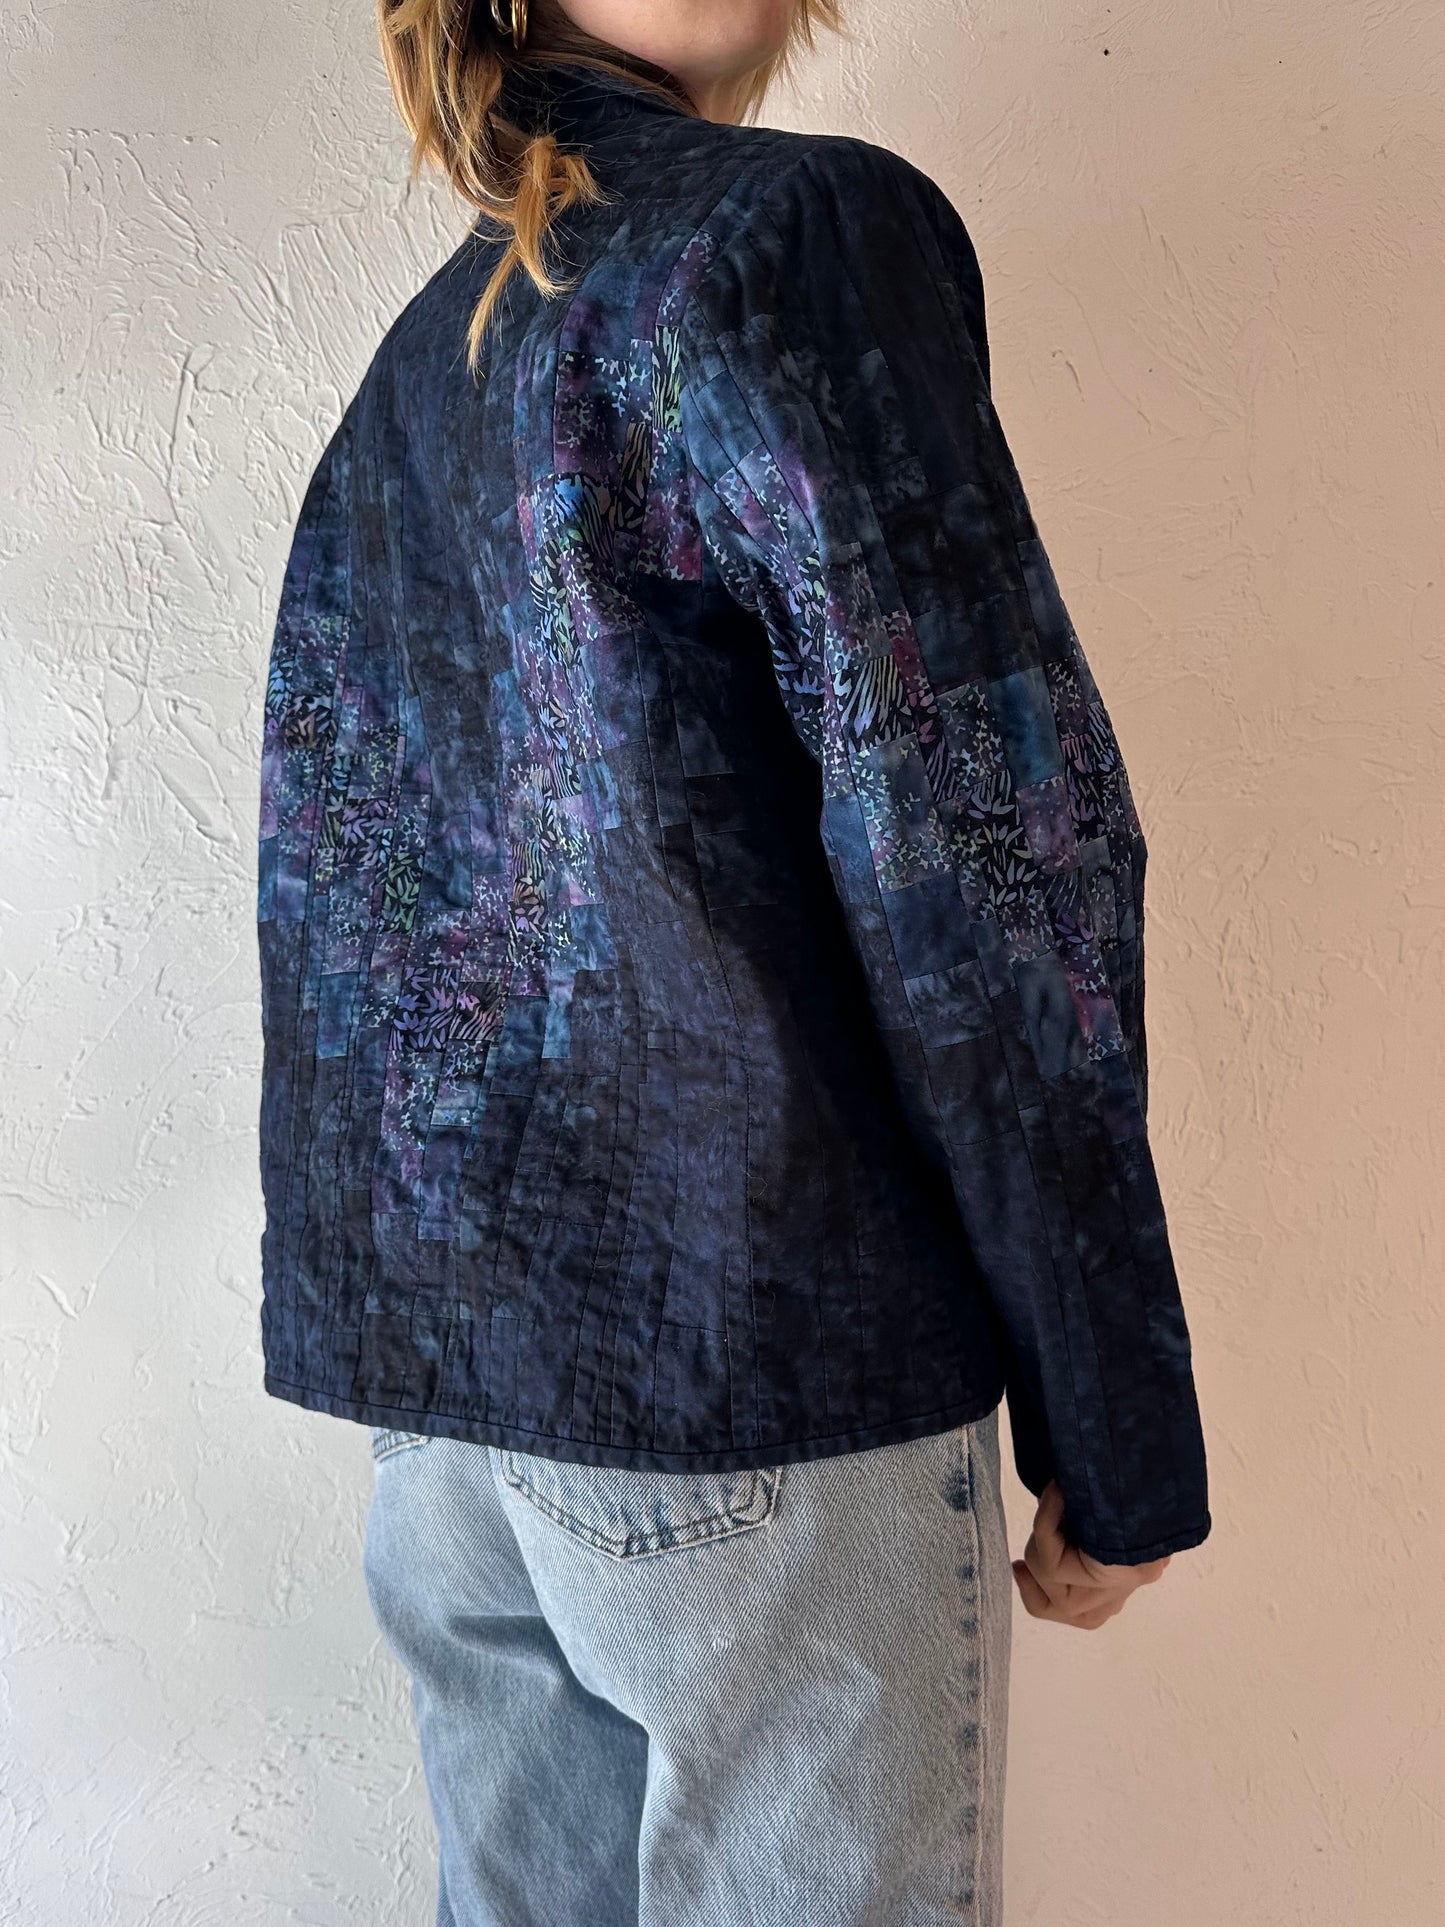 Handmade Quilt Jacket / Small